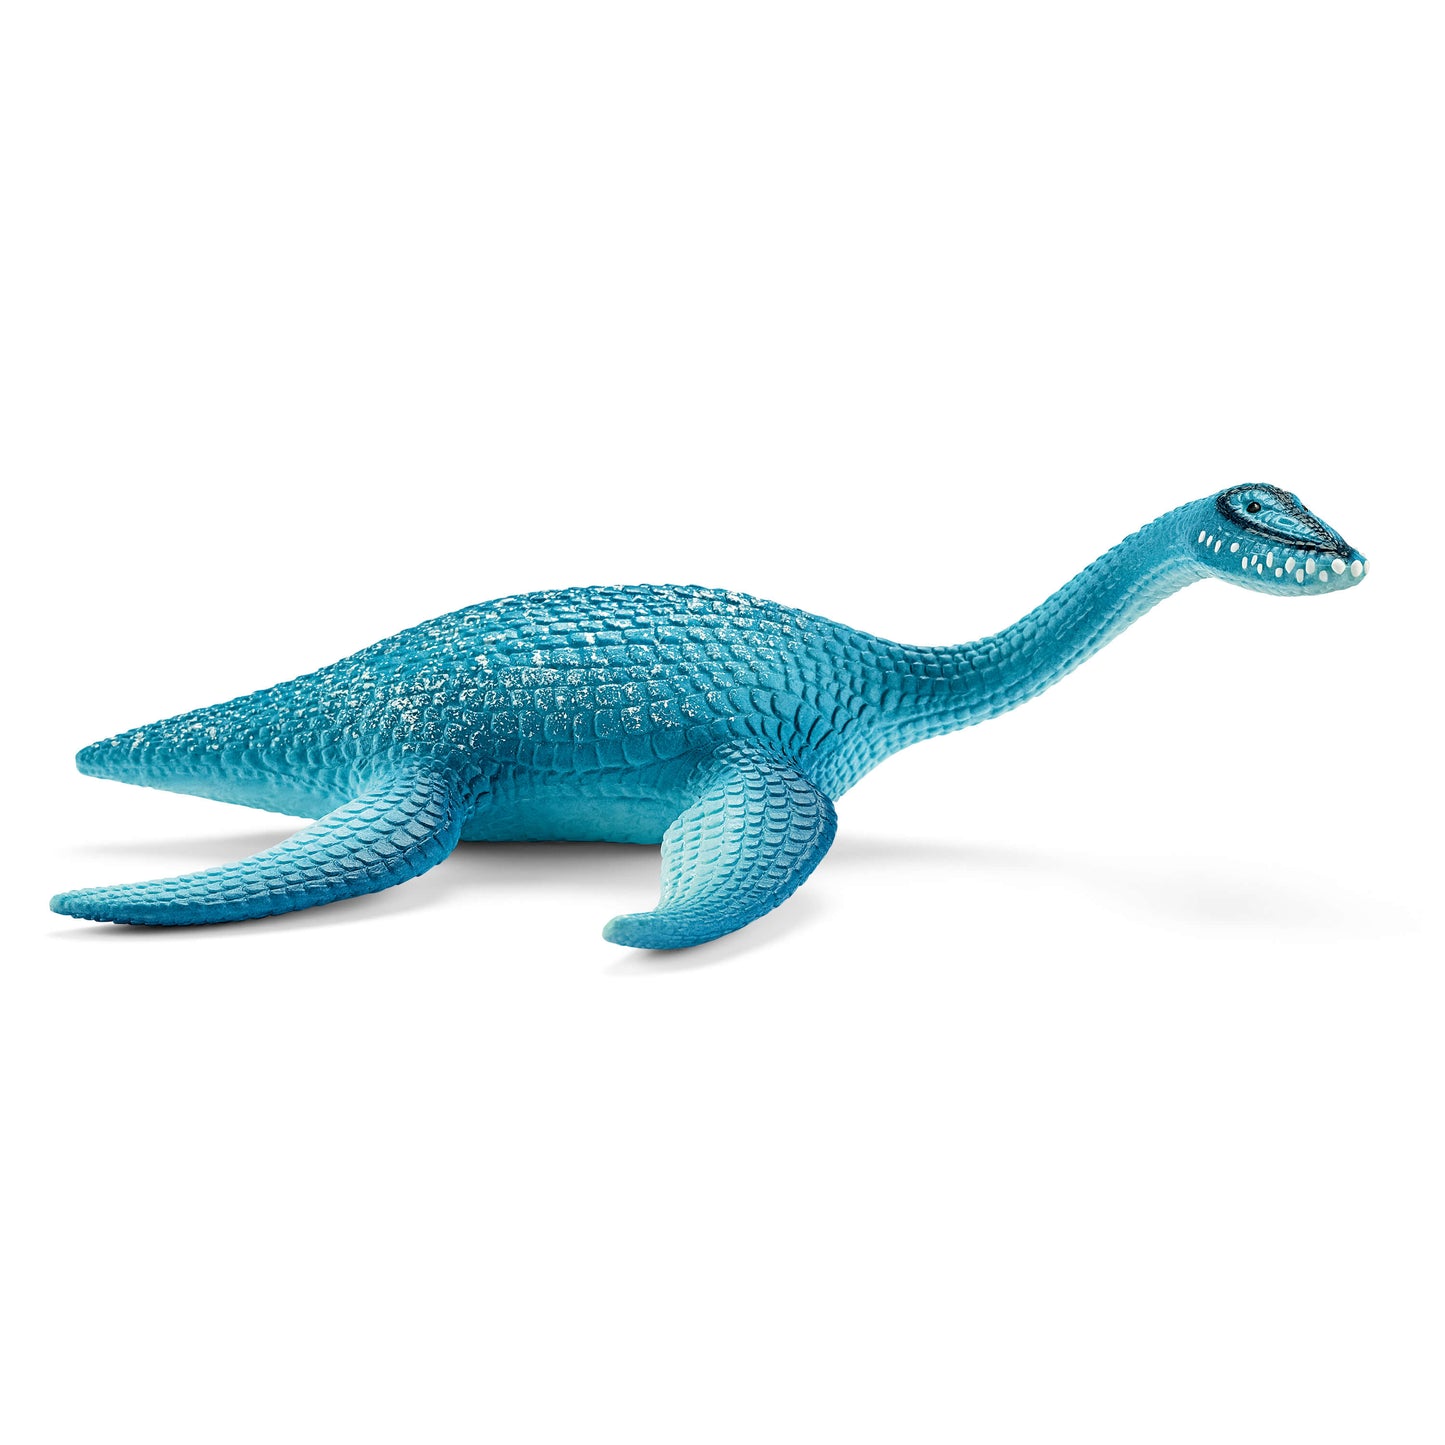 Plesiosaurus 6" Figure